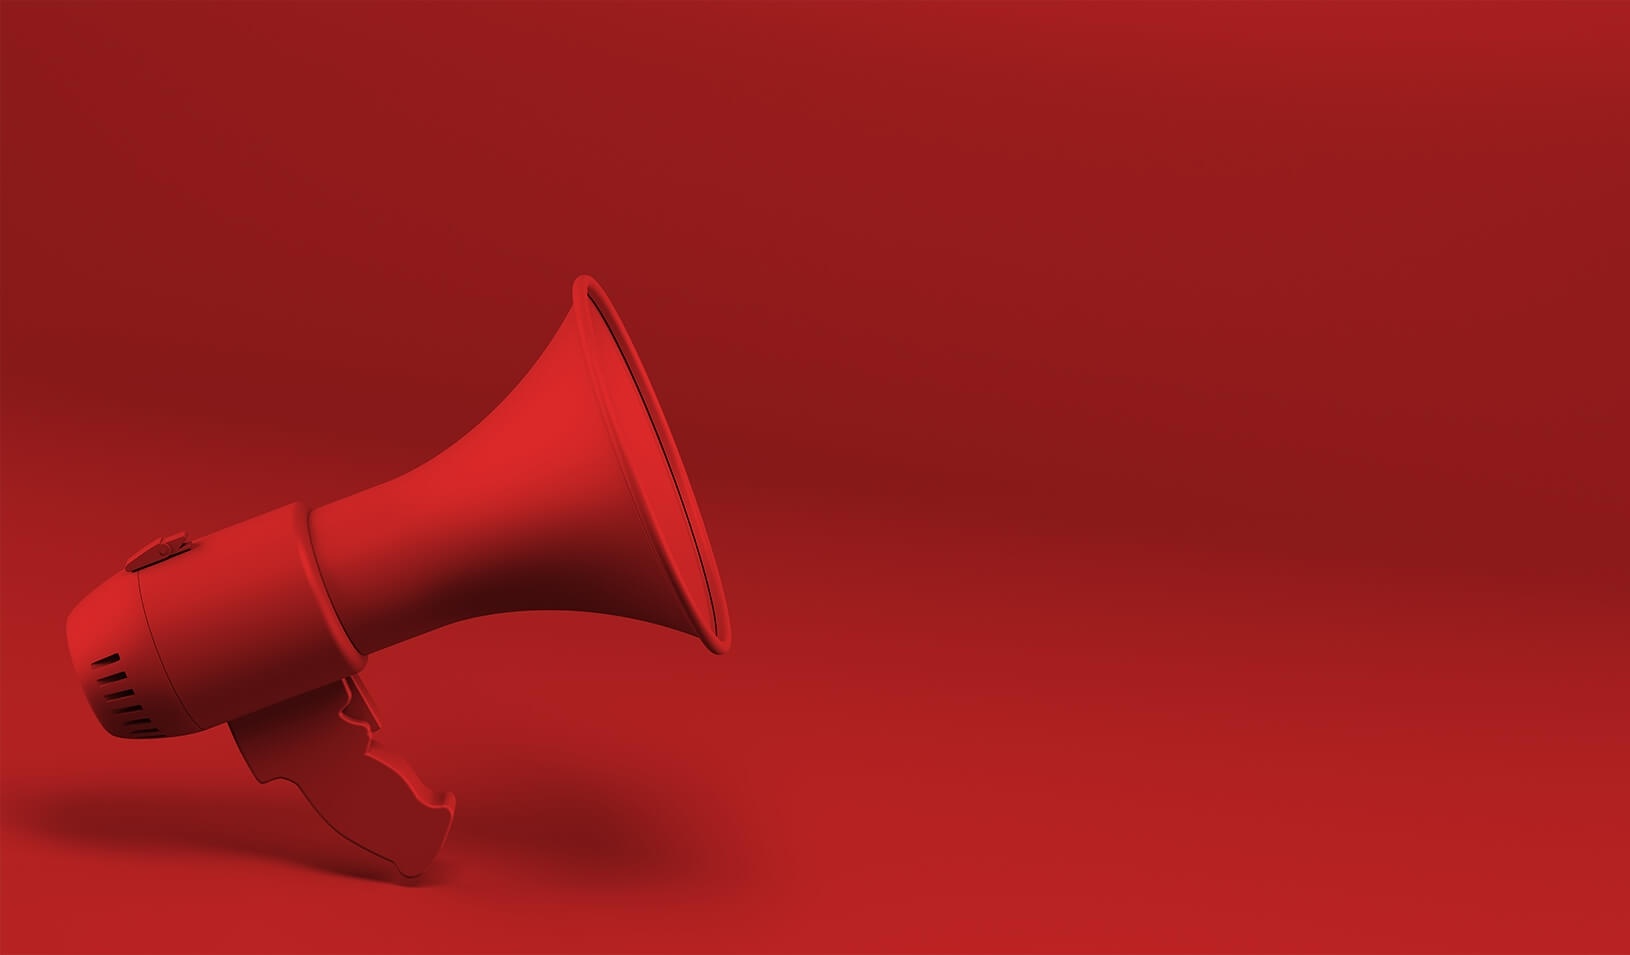 Red megaphone image